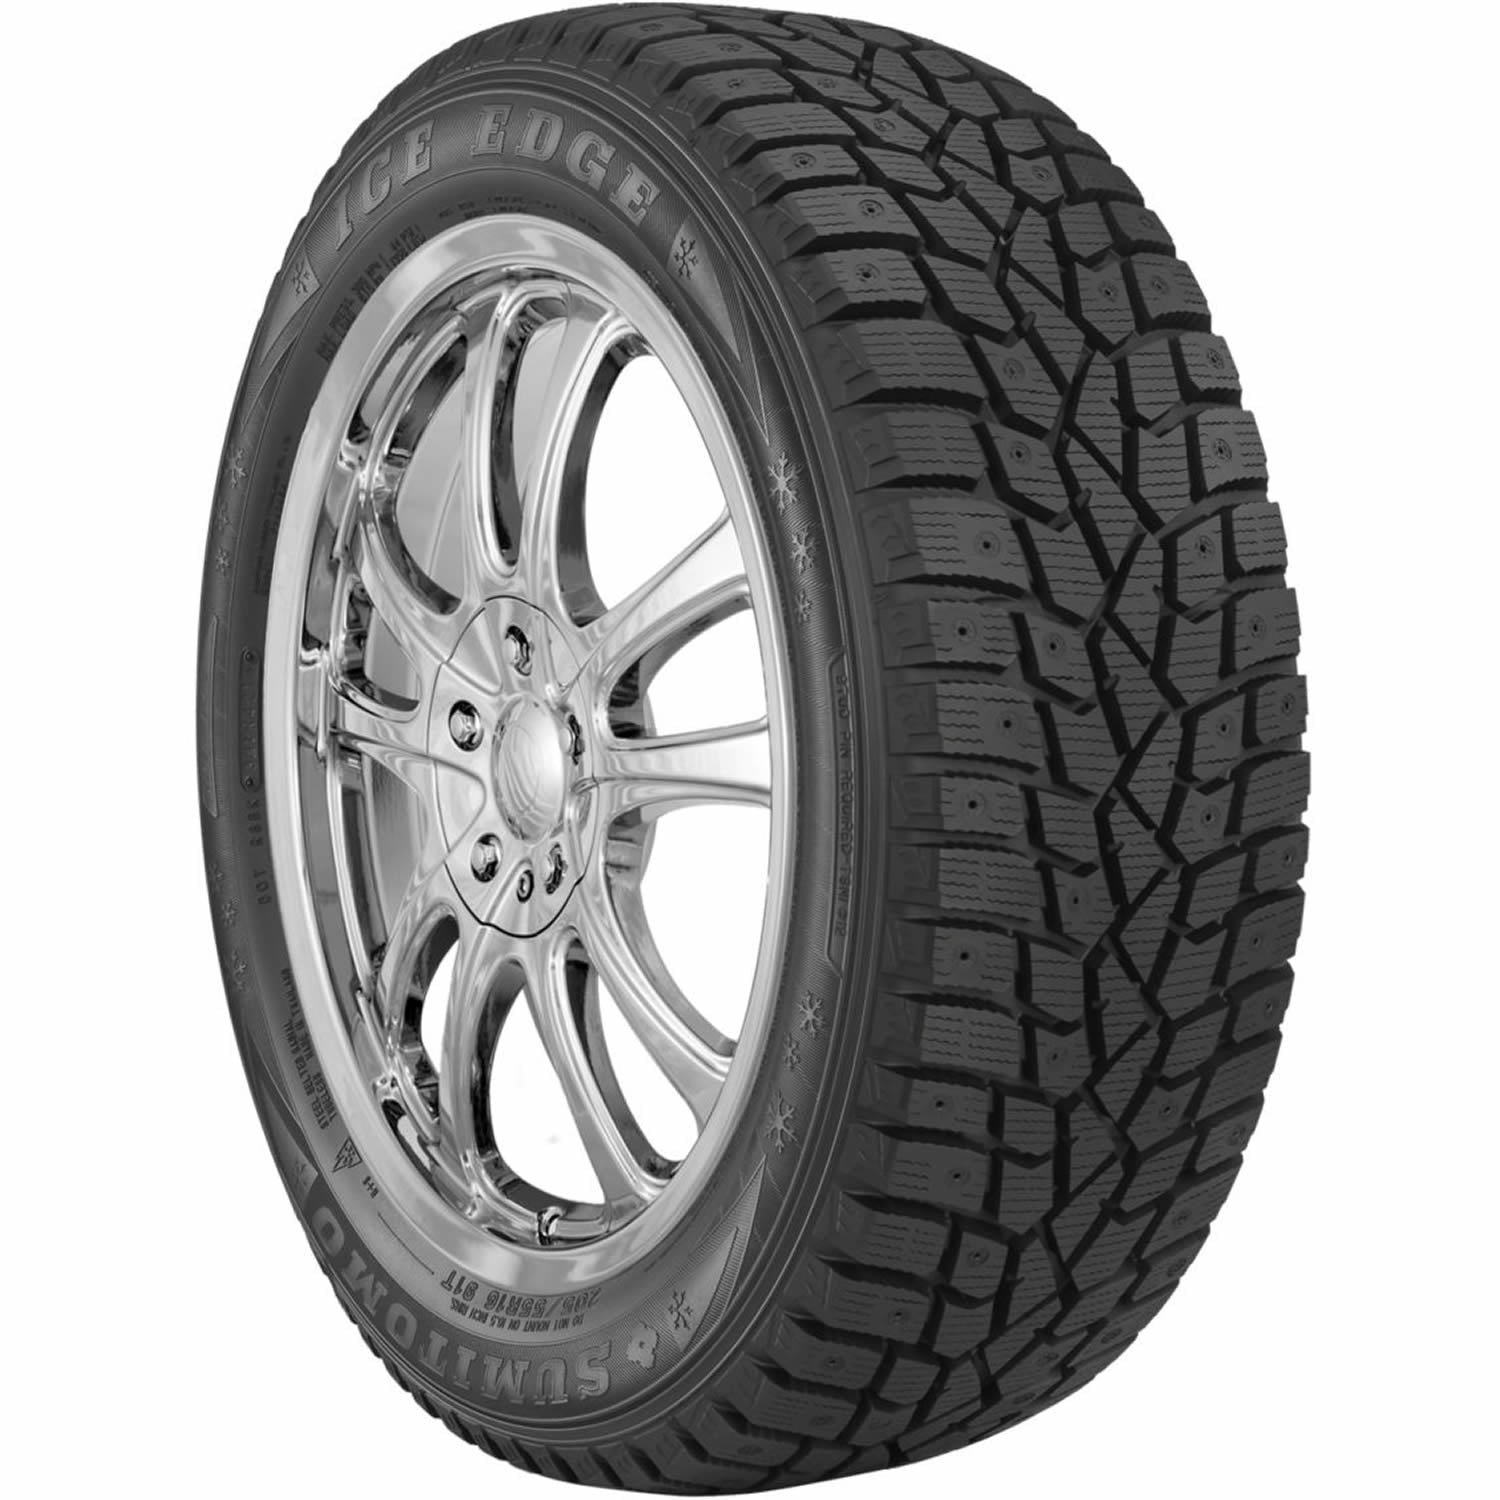 SUMITOMO ICE EDGE 185/60R15 (24X7.3R 15) Tires